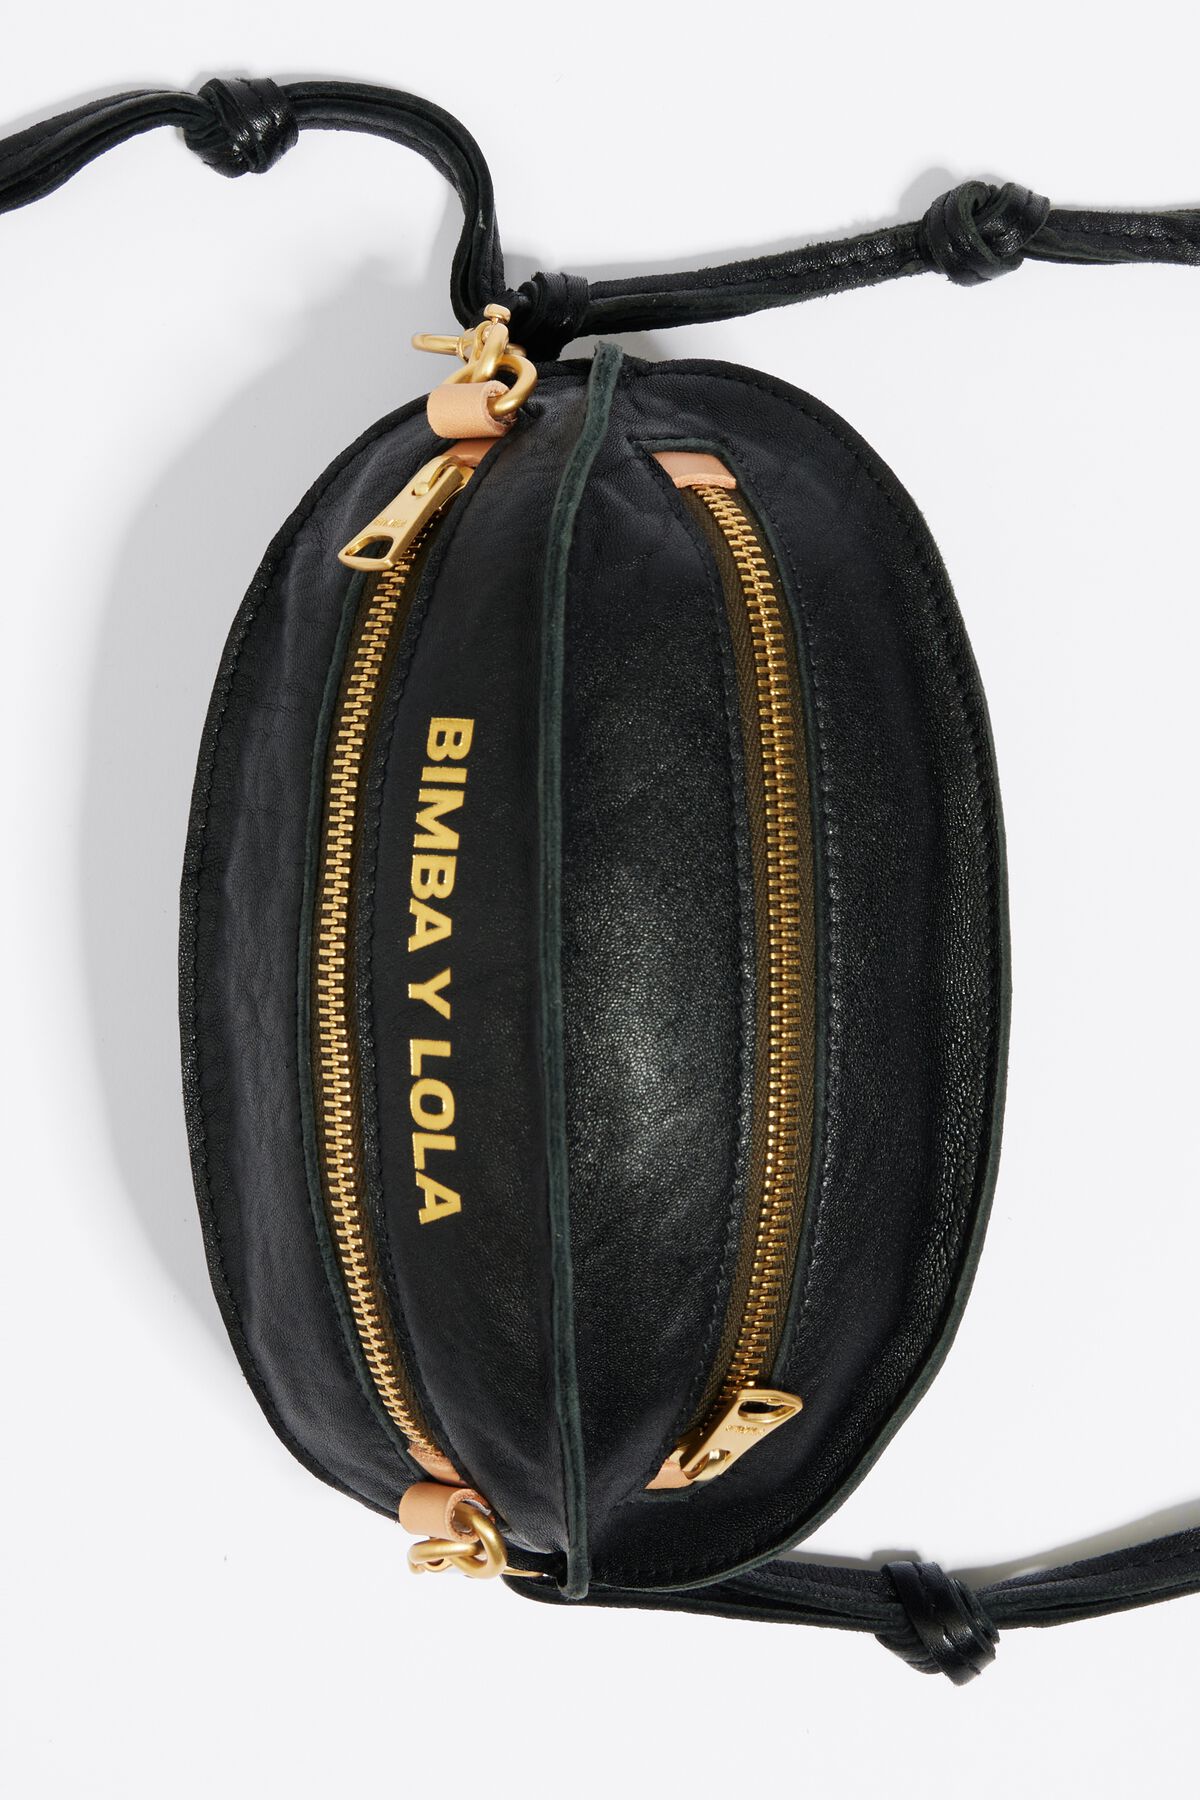 BIMBA Y LOLA | Azure Women‘s Cross-body Bags | YOOX